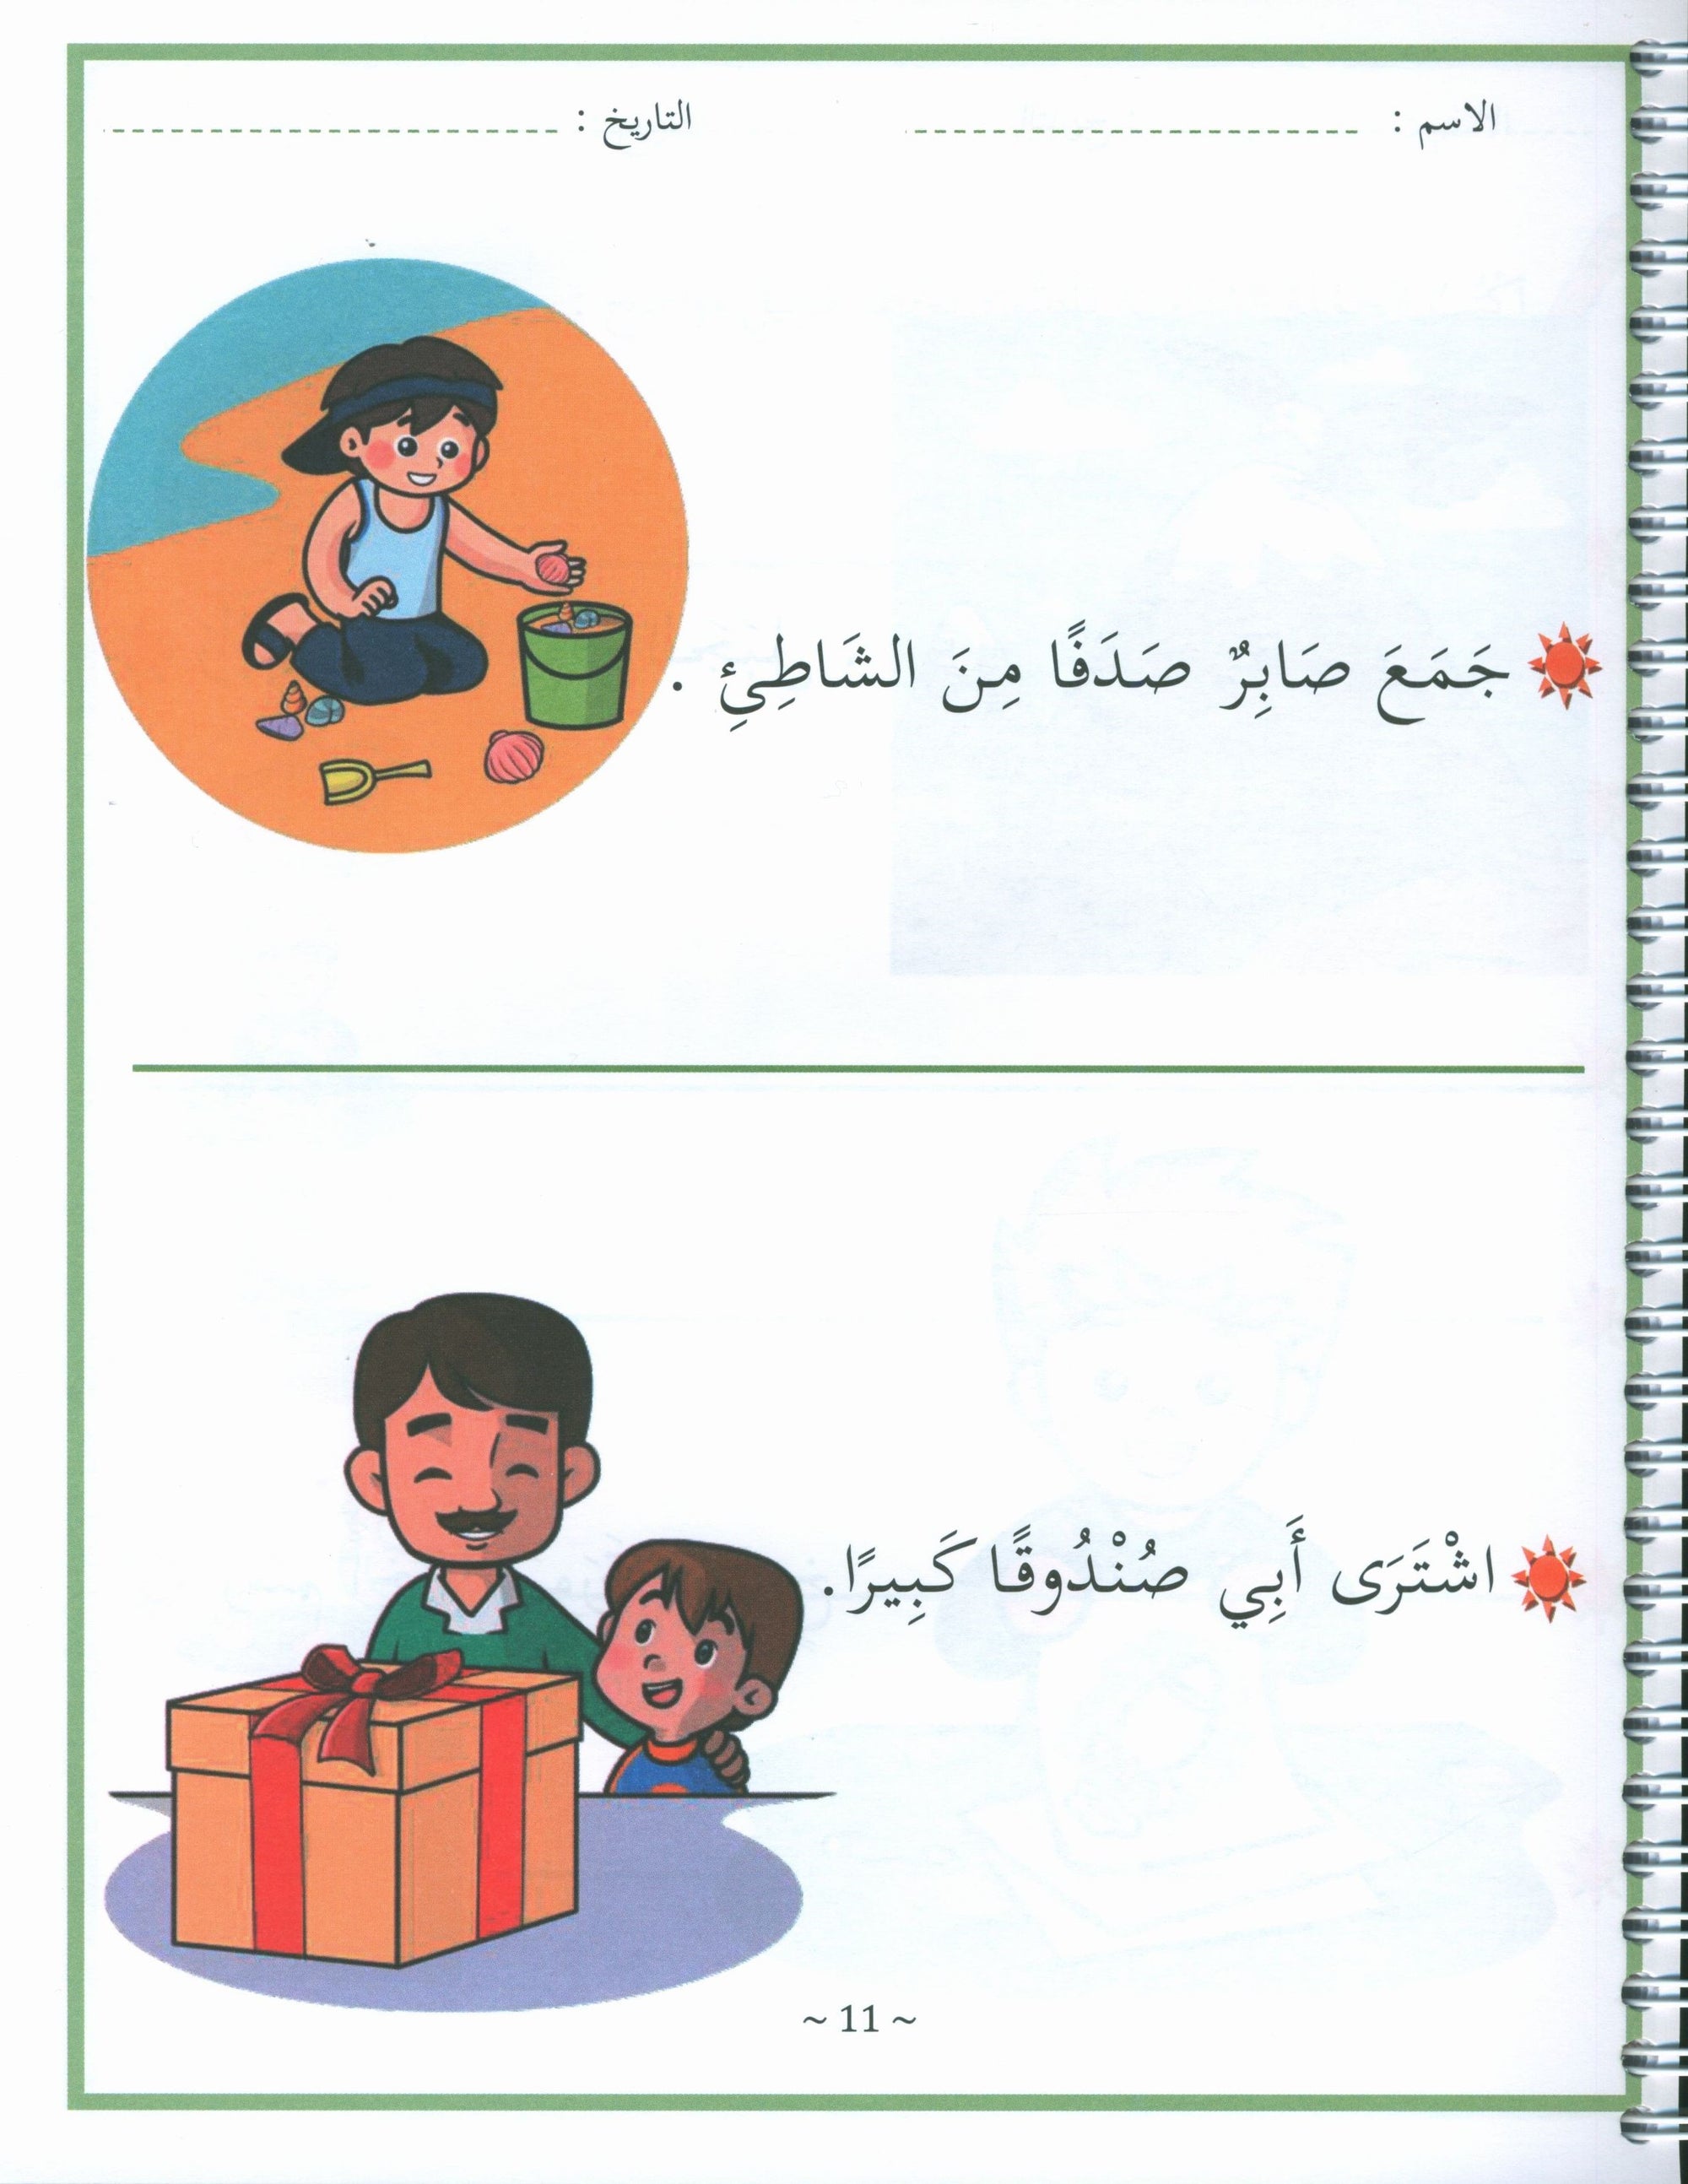 My first letters and words grade 1 Part 2 - حروفي وكلماتي الأولى